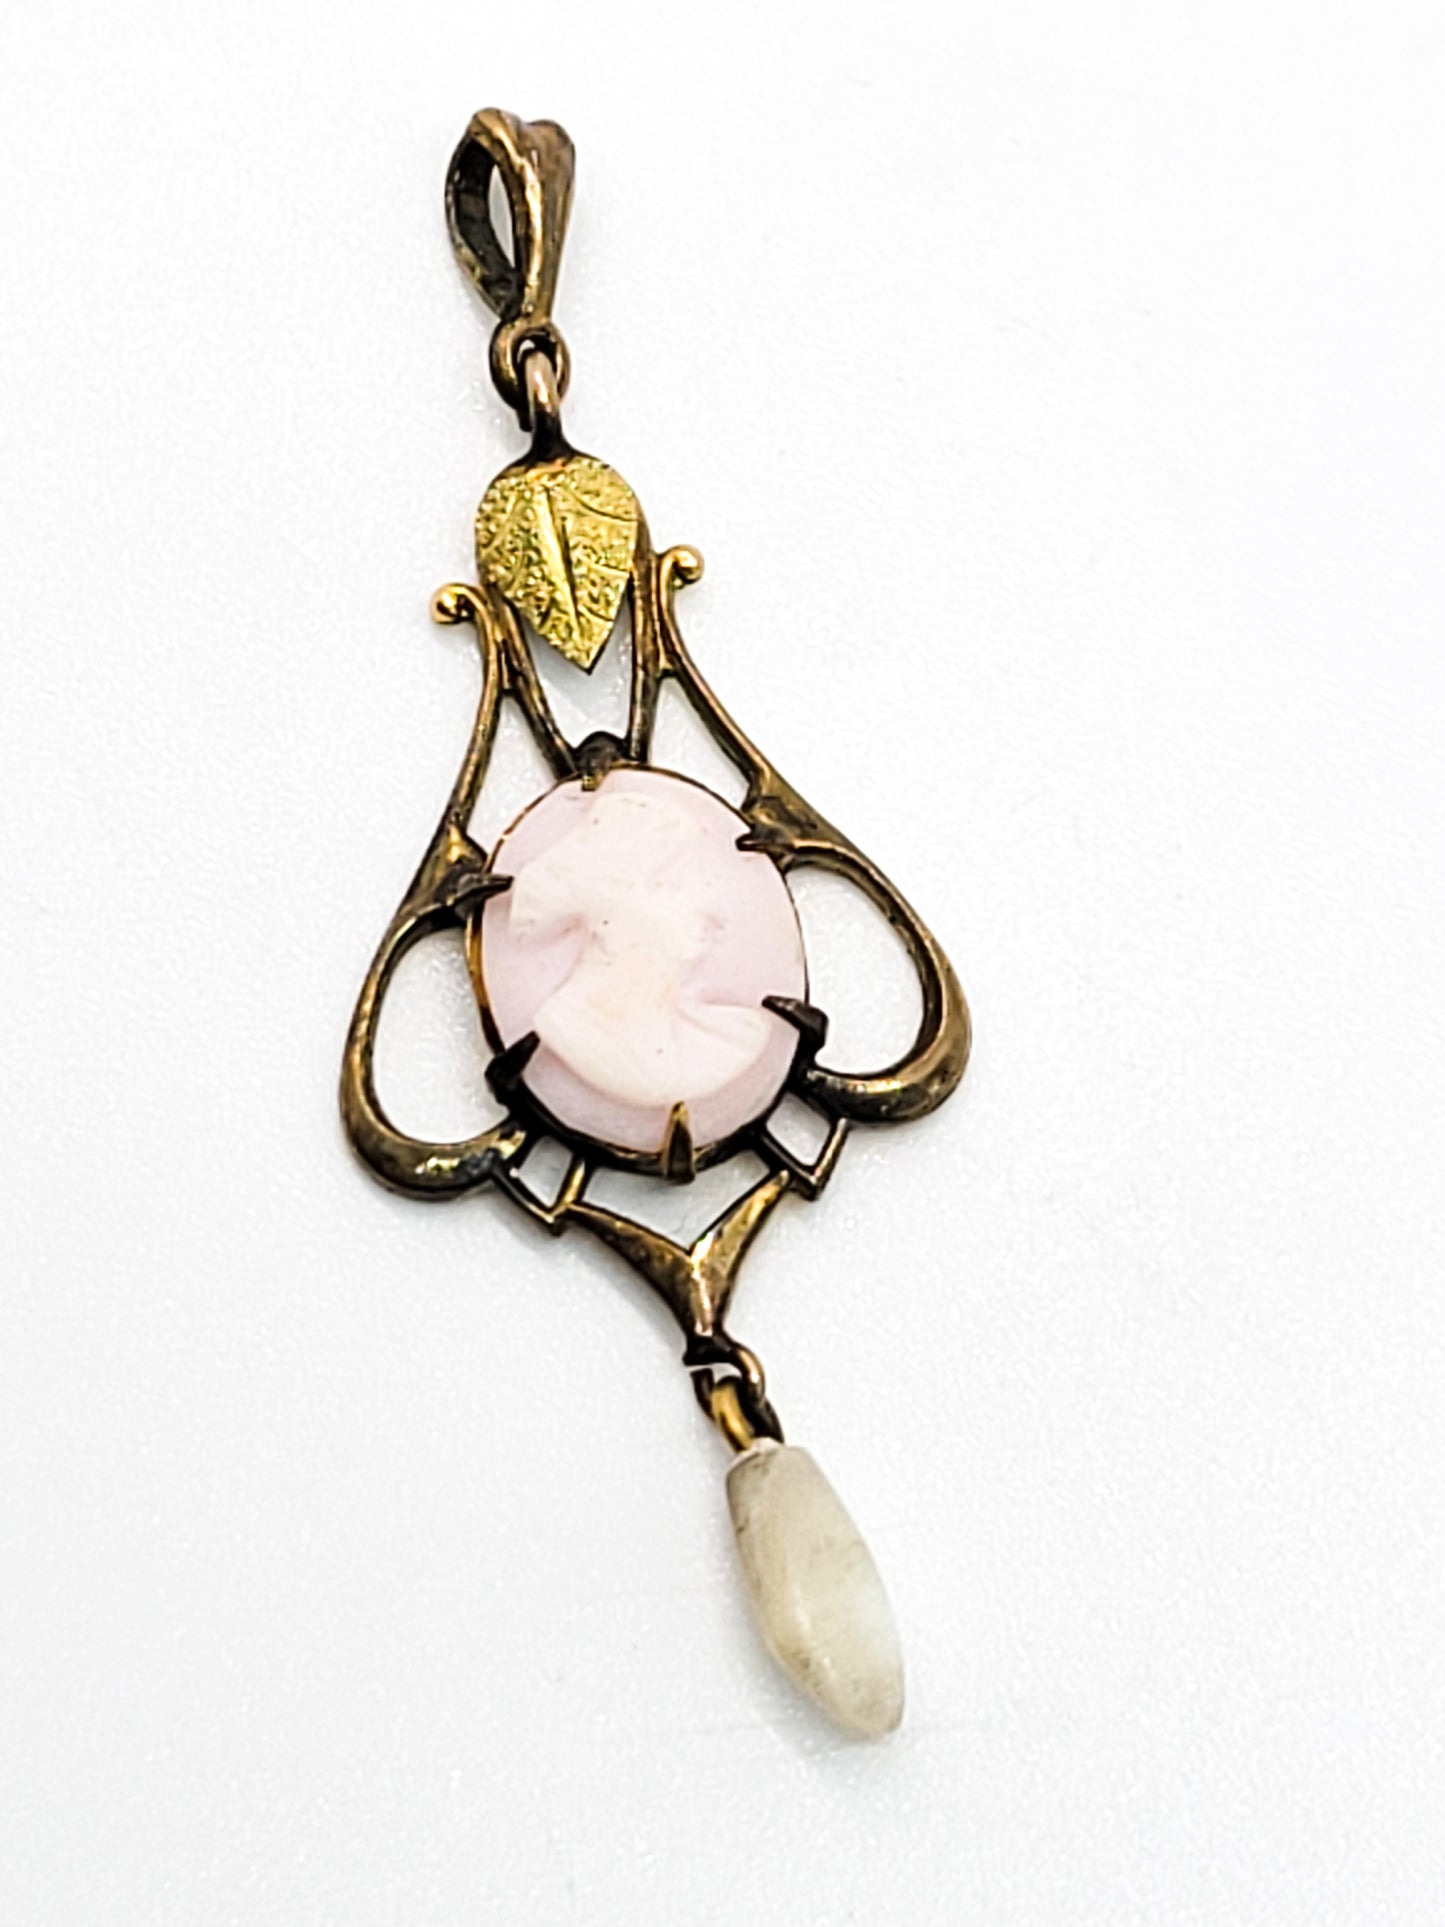 Gold Diggers Black Hills gold Pink cameo freshwater pearl gold filled pendant vintage